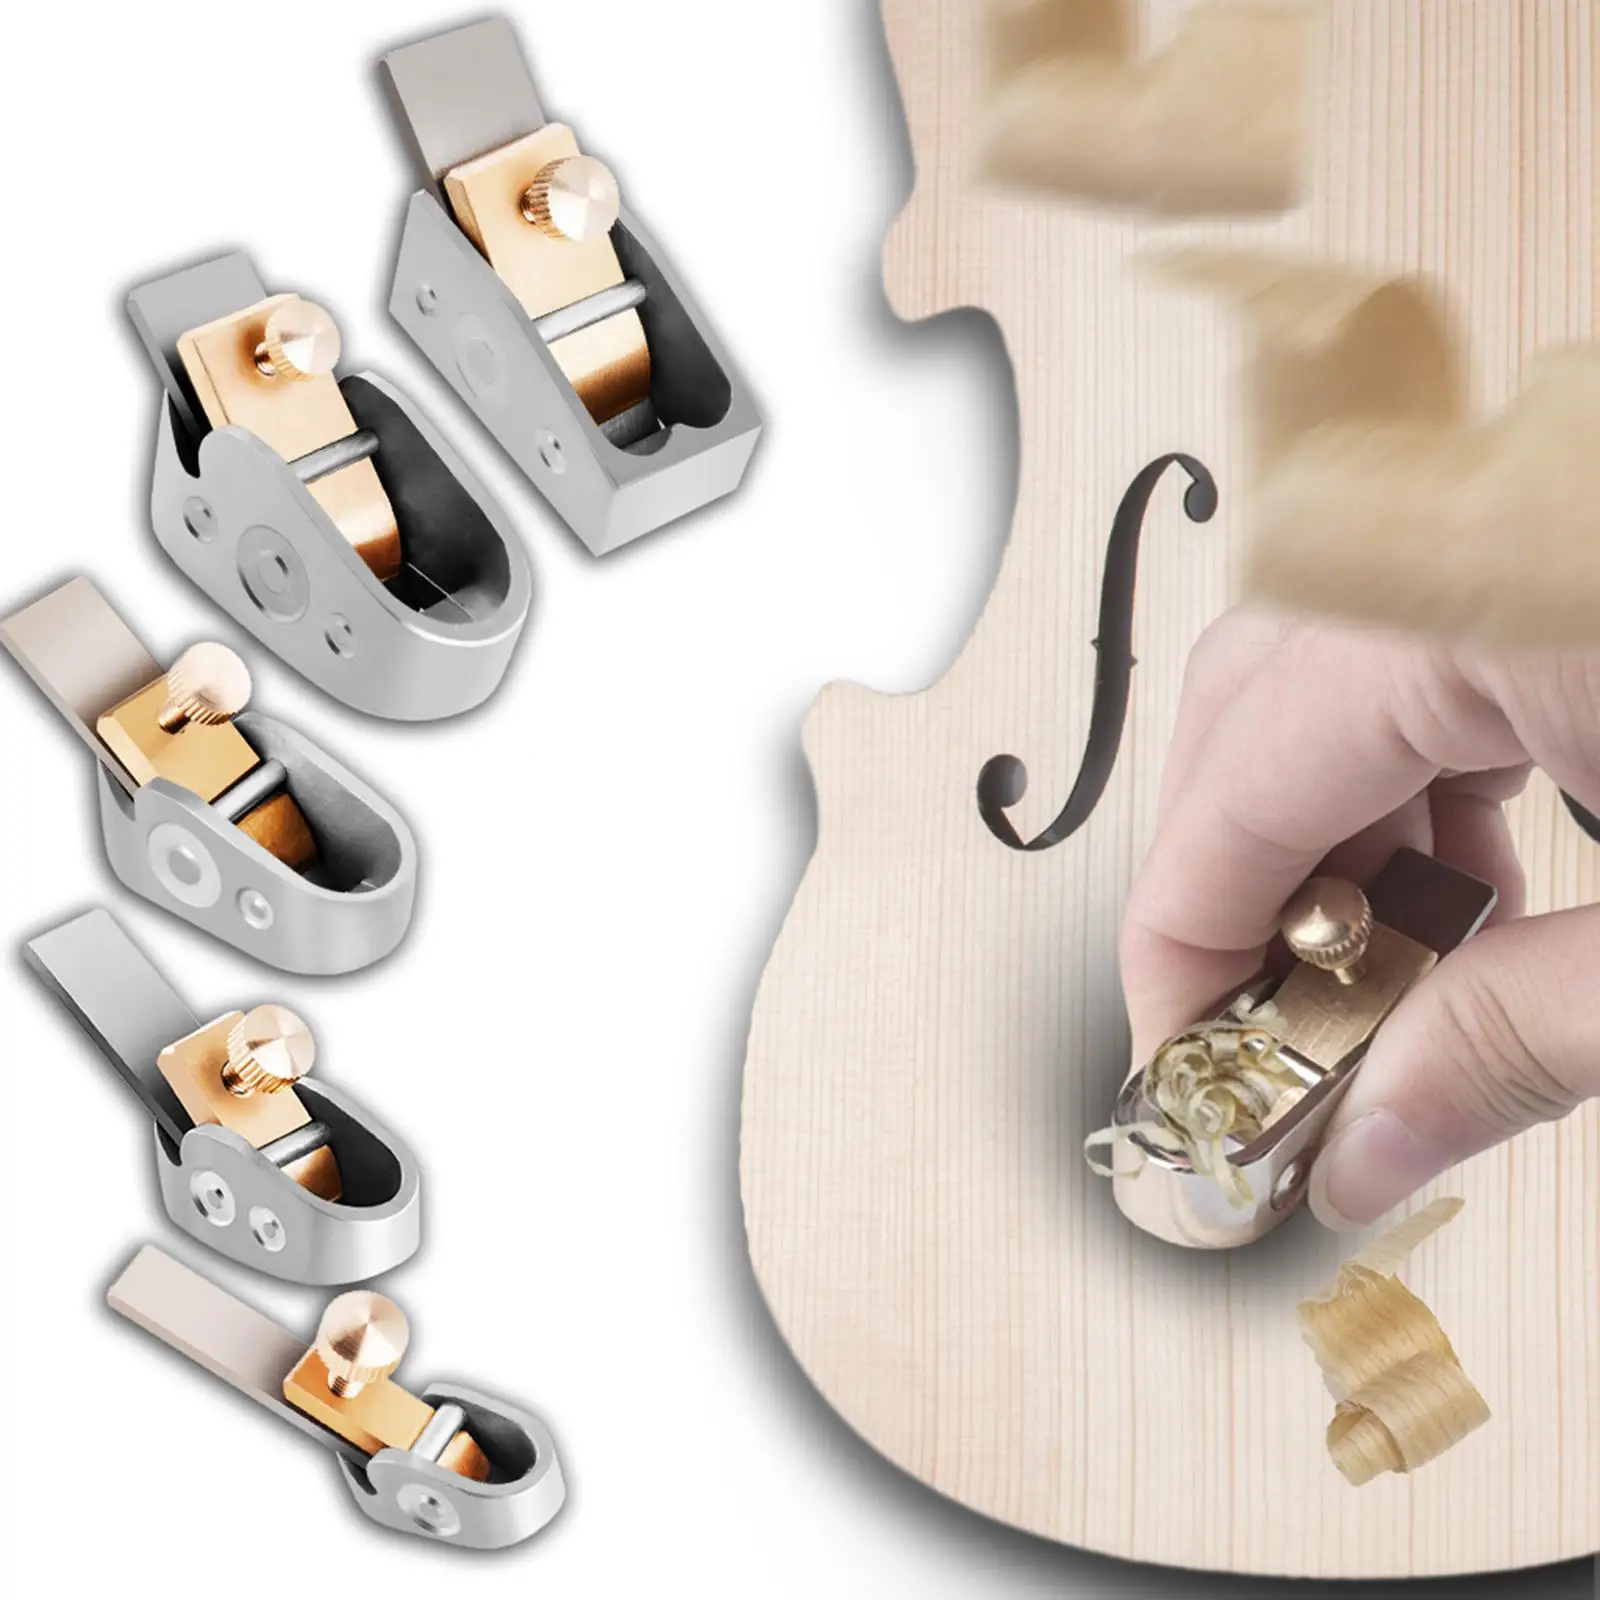 Violin Thumb Planer Music Instrument Accesssory Thumb Plane Finger Planer for DIY Violin Surface Smoothing